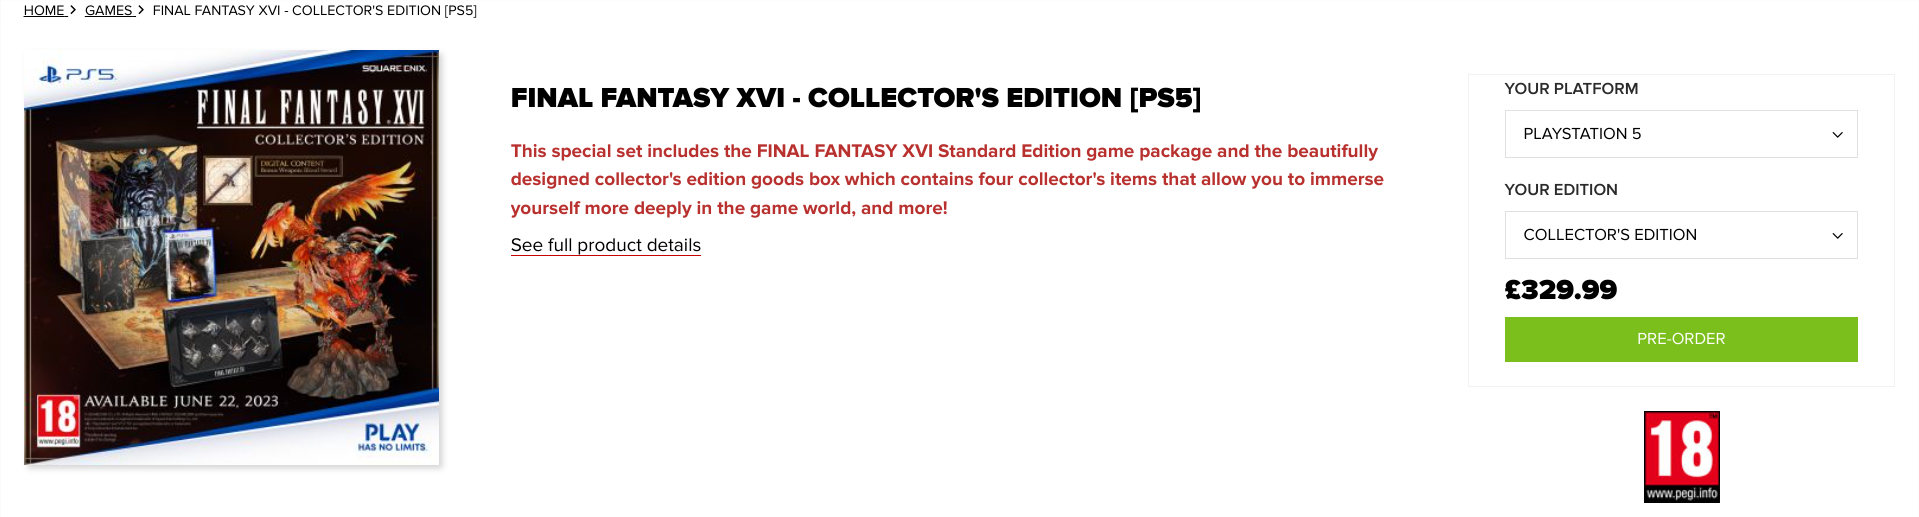 Final Fantasy XVI - Collector's Edition (PS5)